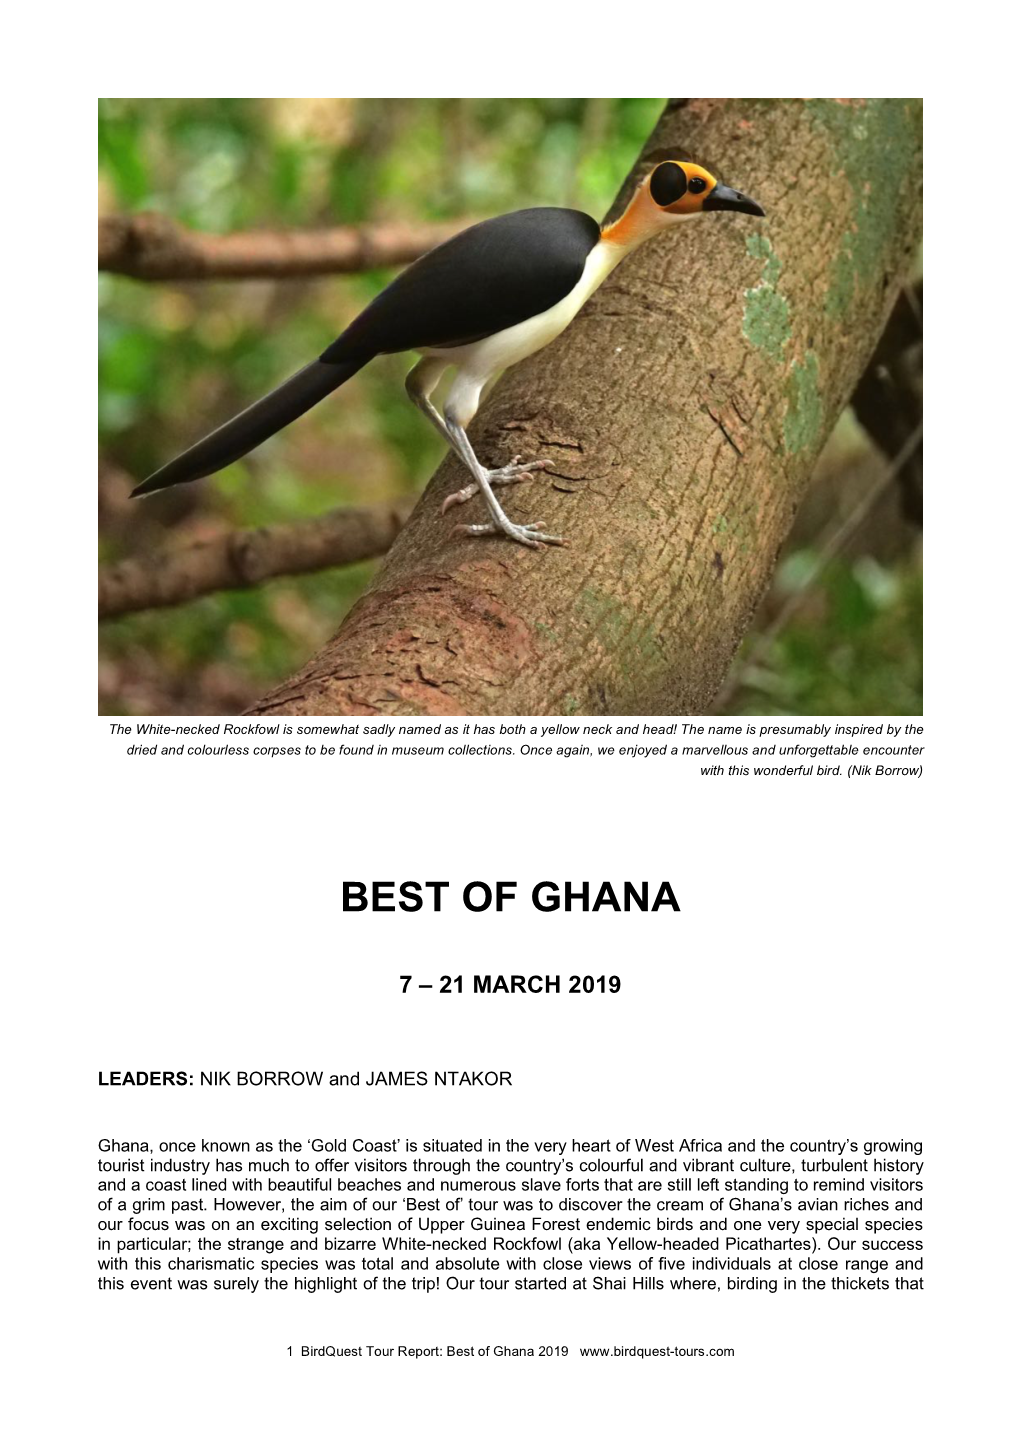 Best of Ghana Tour Report 2019